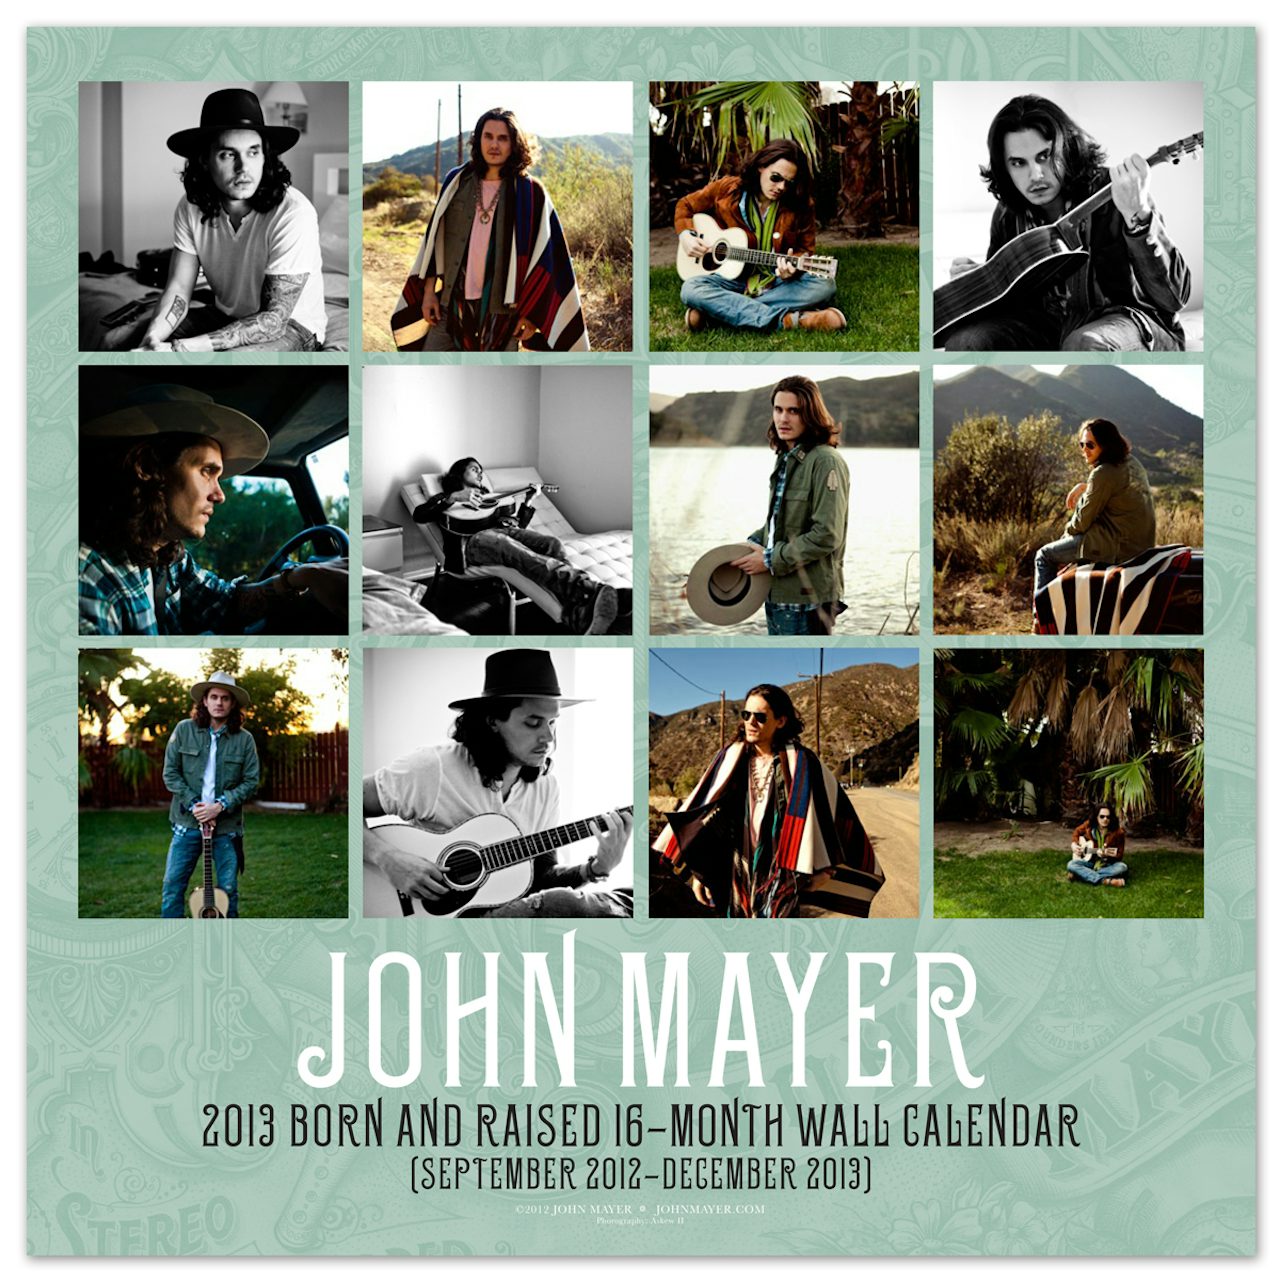 John Mayer 2013 Born and Raised Calendar and Wall Poster Combo